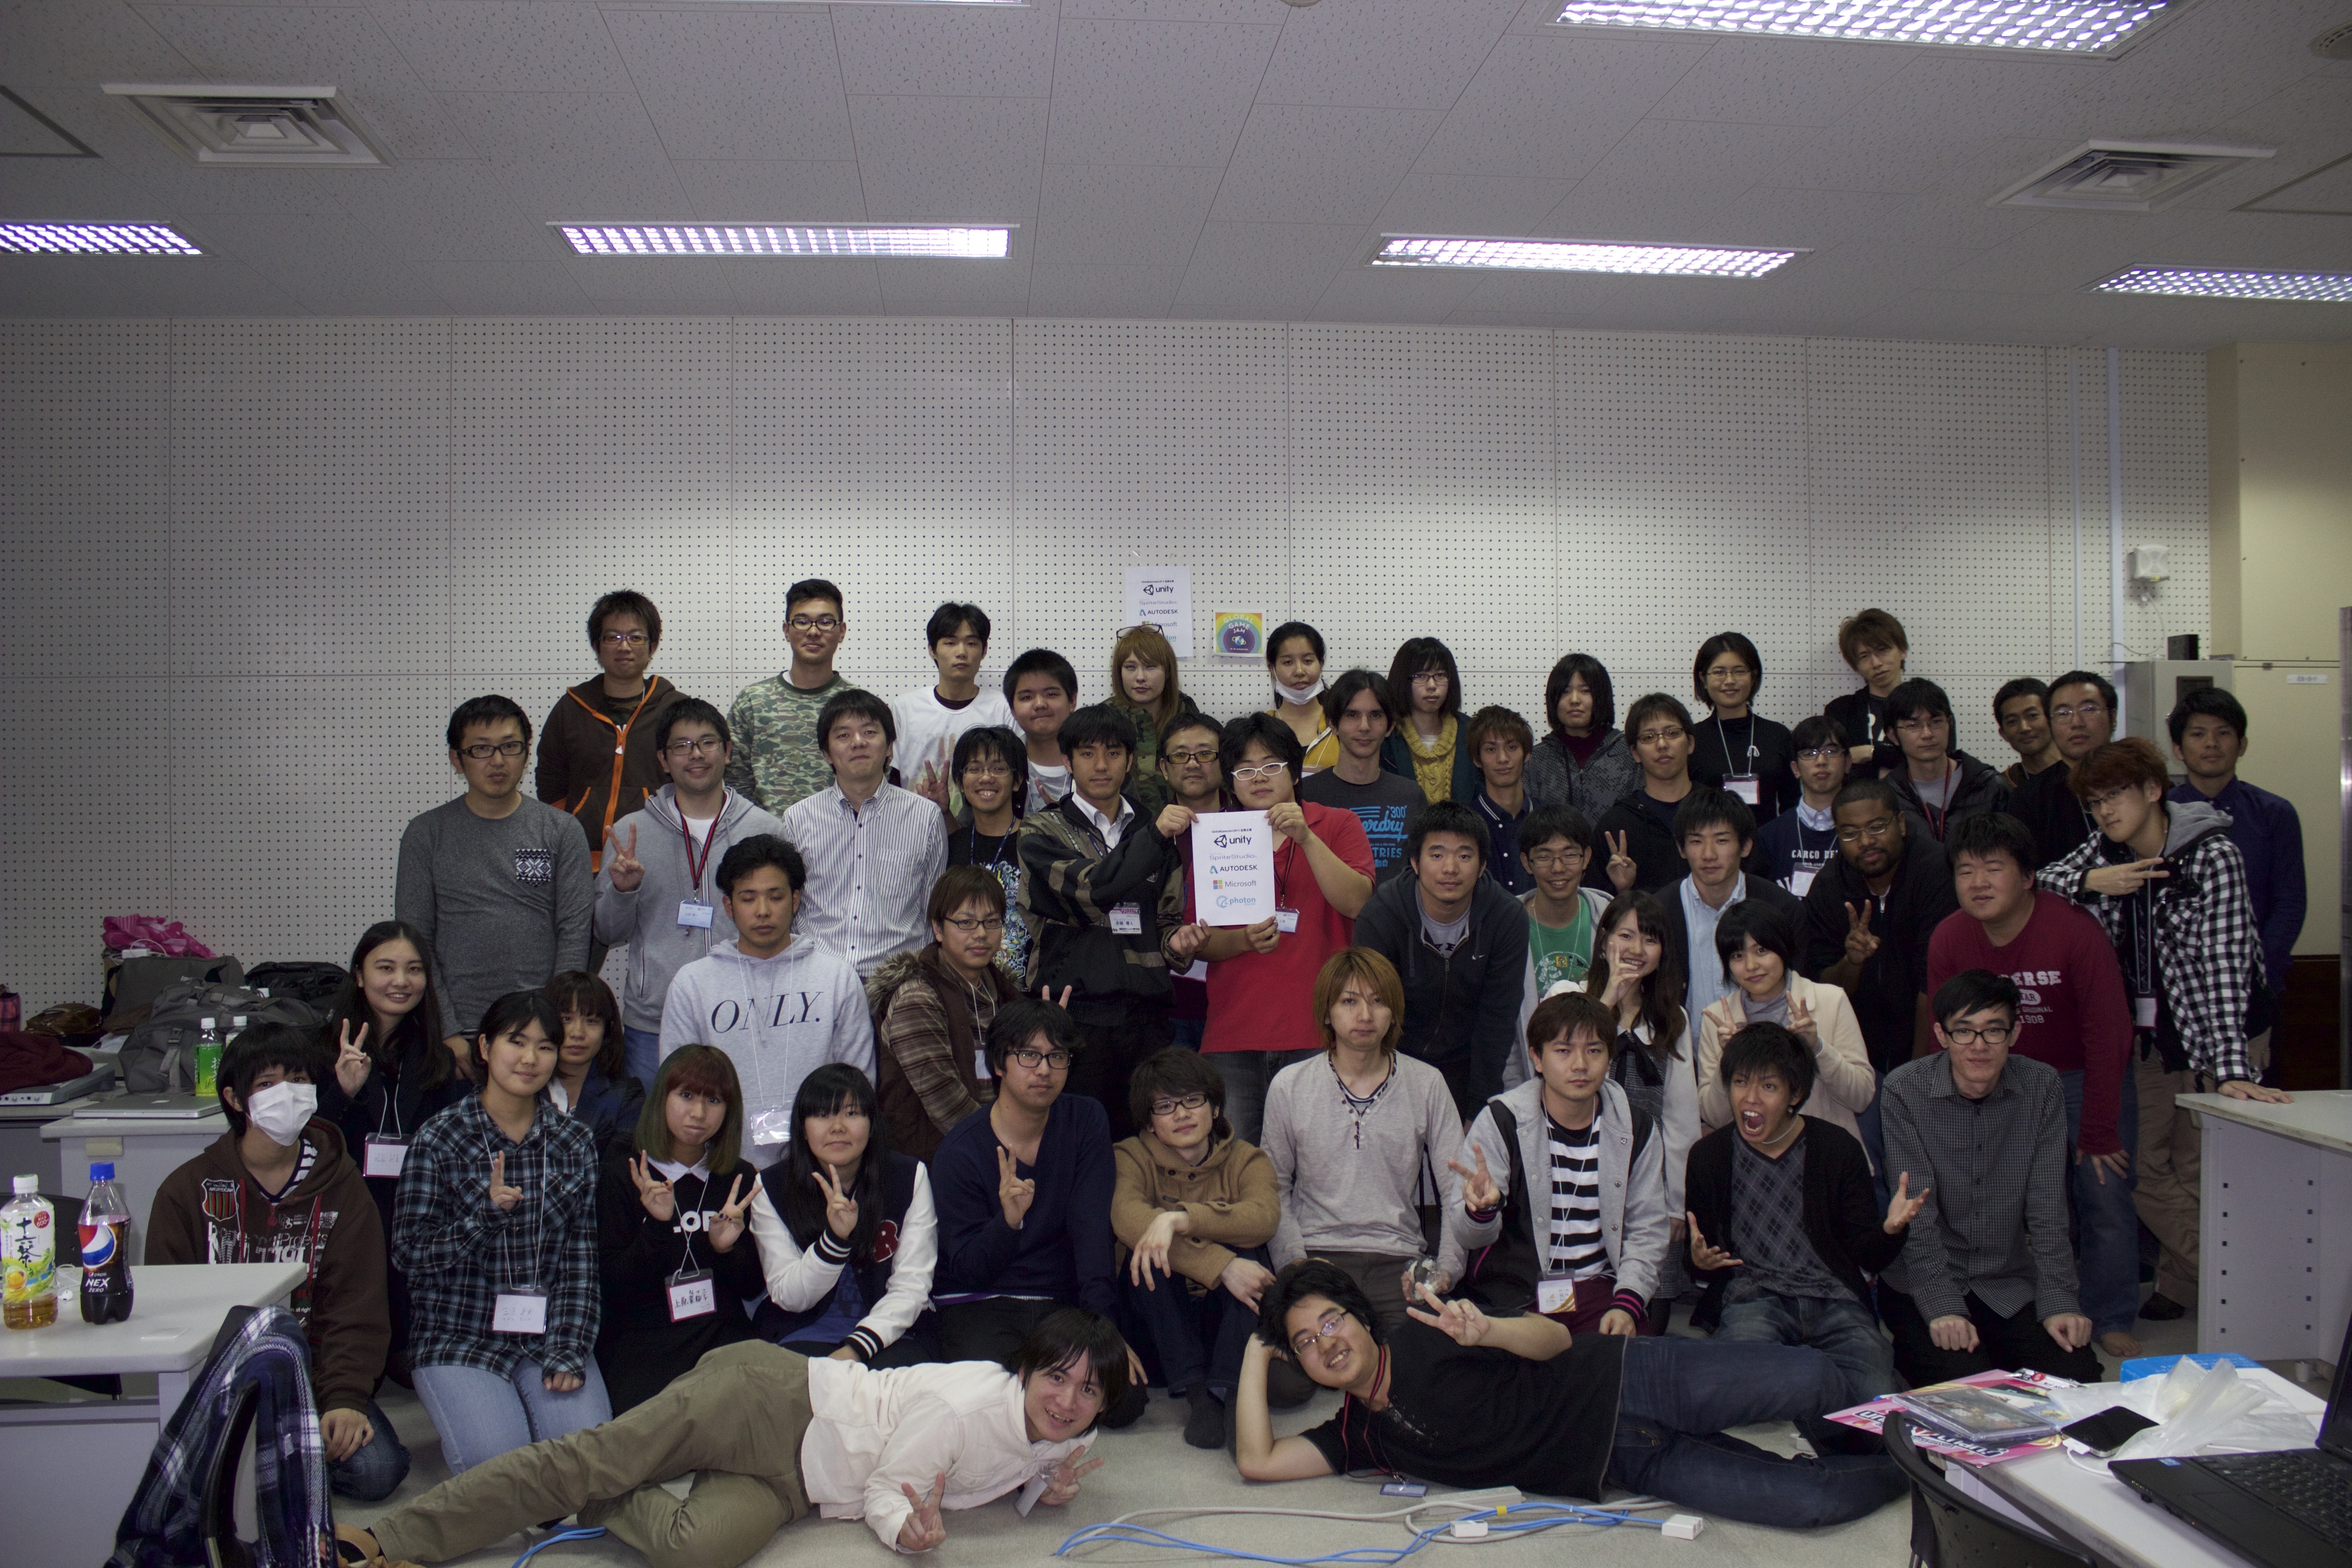 「Global Game Jam 2015 琉球大学」参加者集合写真